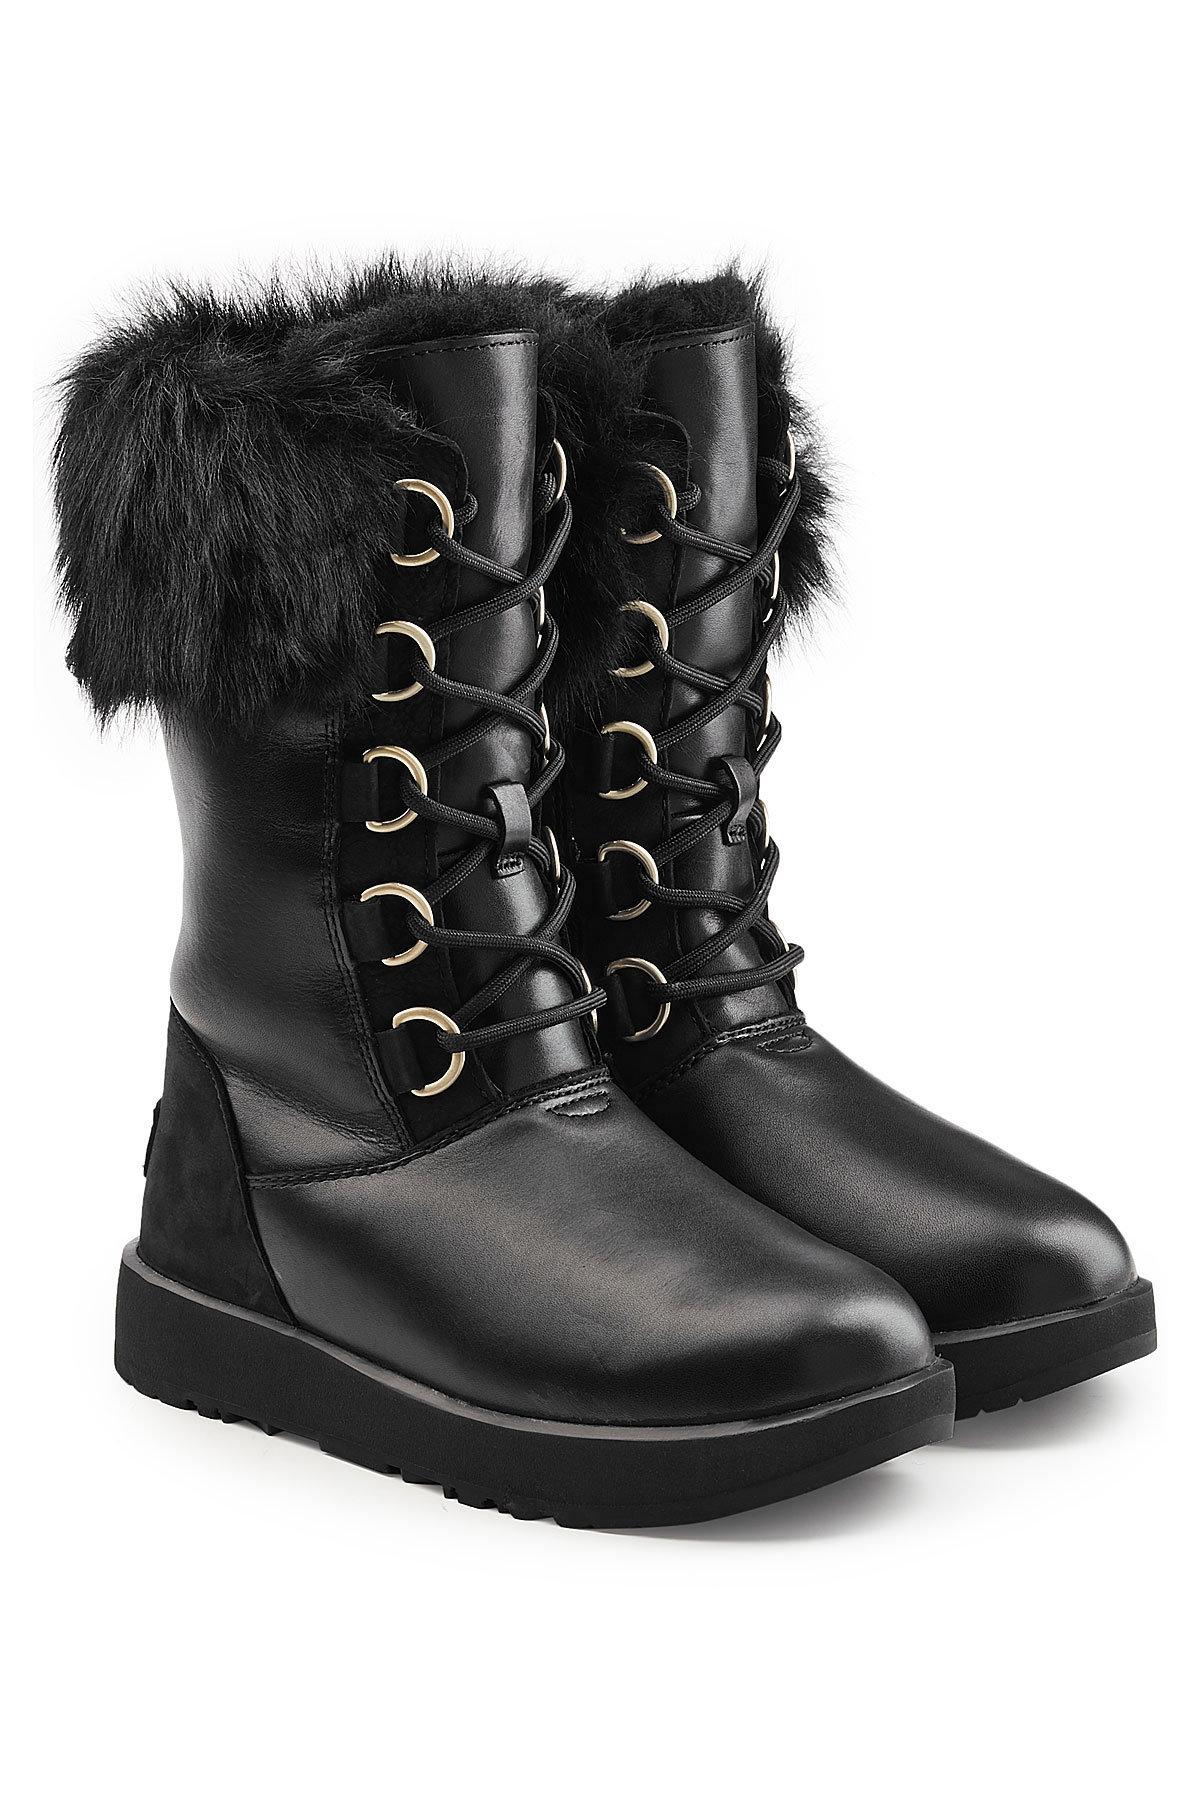 ugg aya genuine sheepskin waterproof leather boot